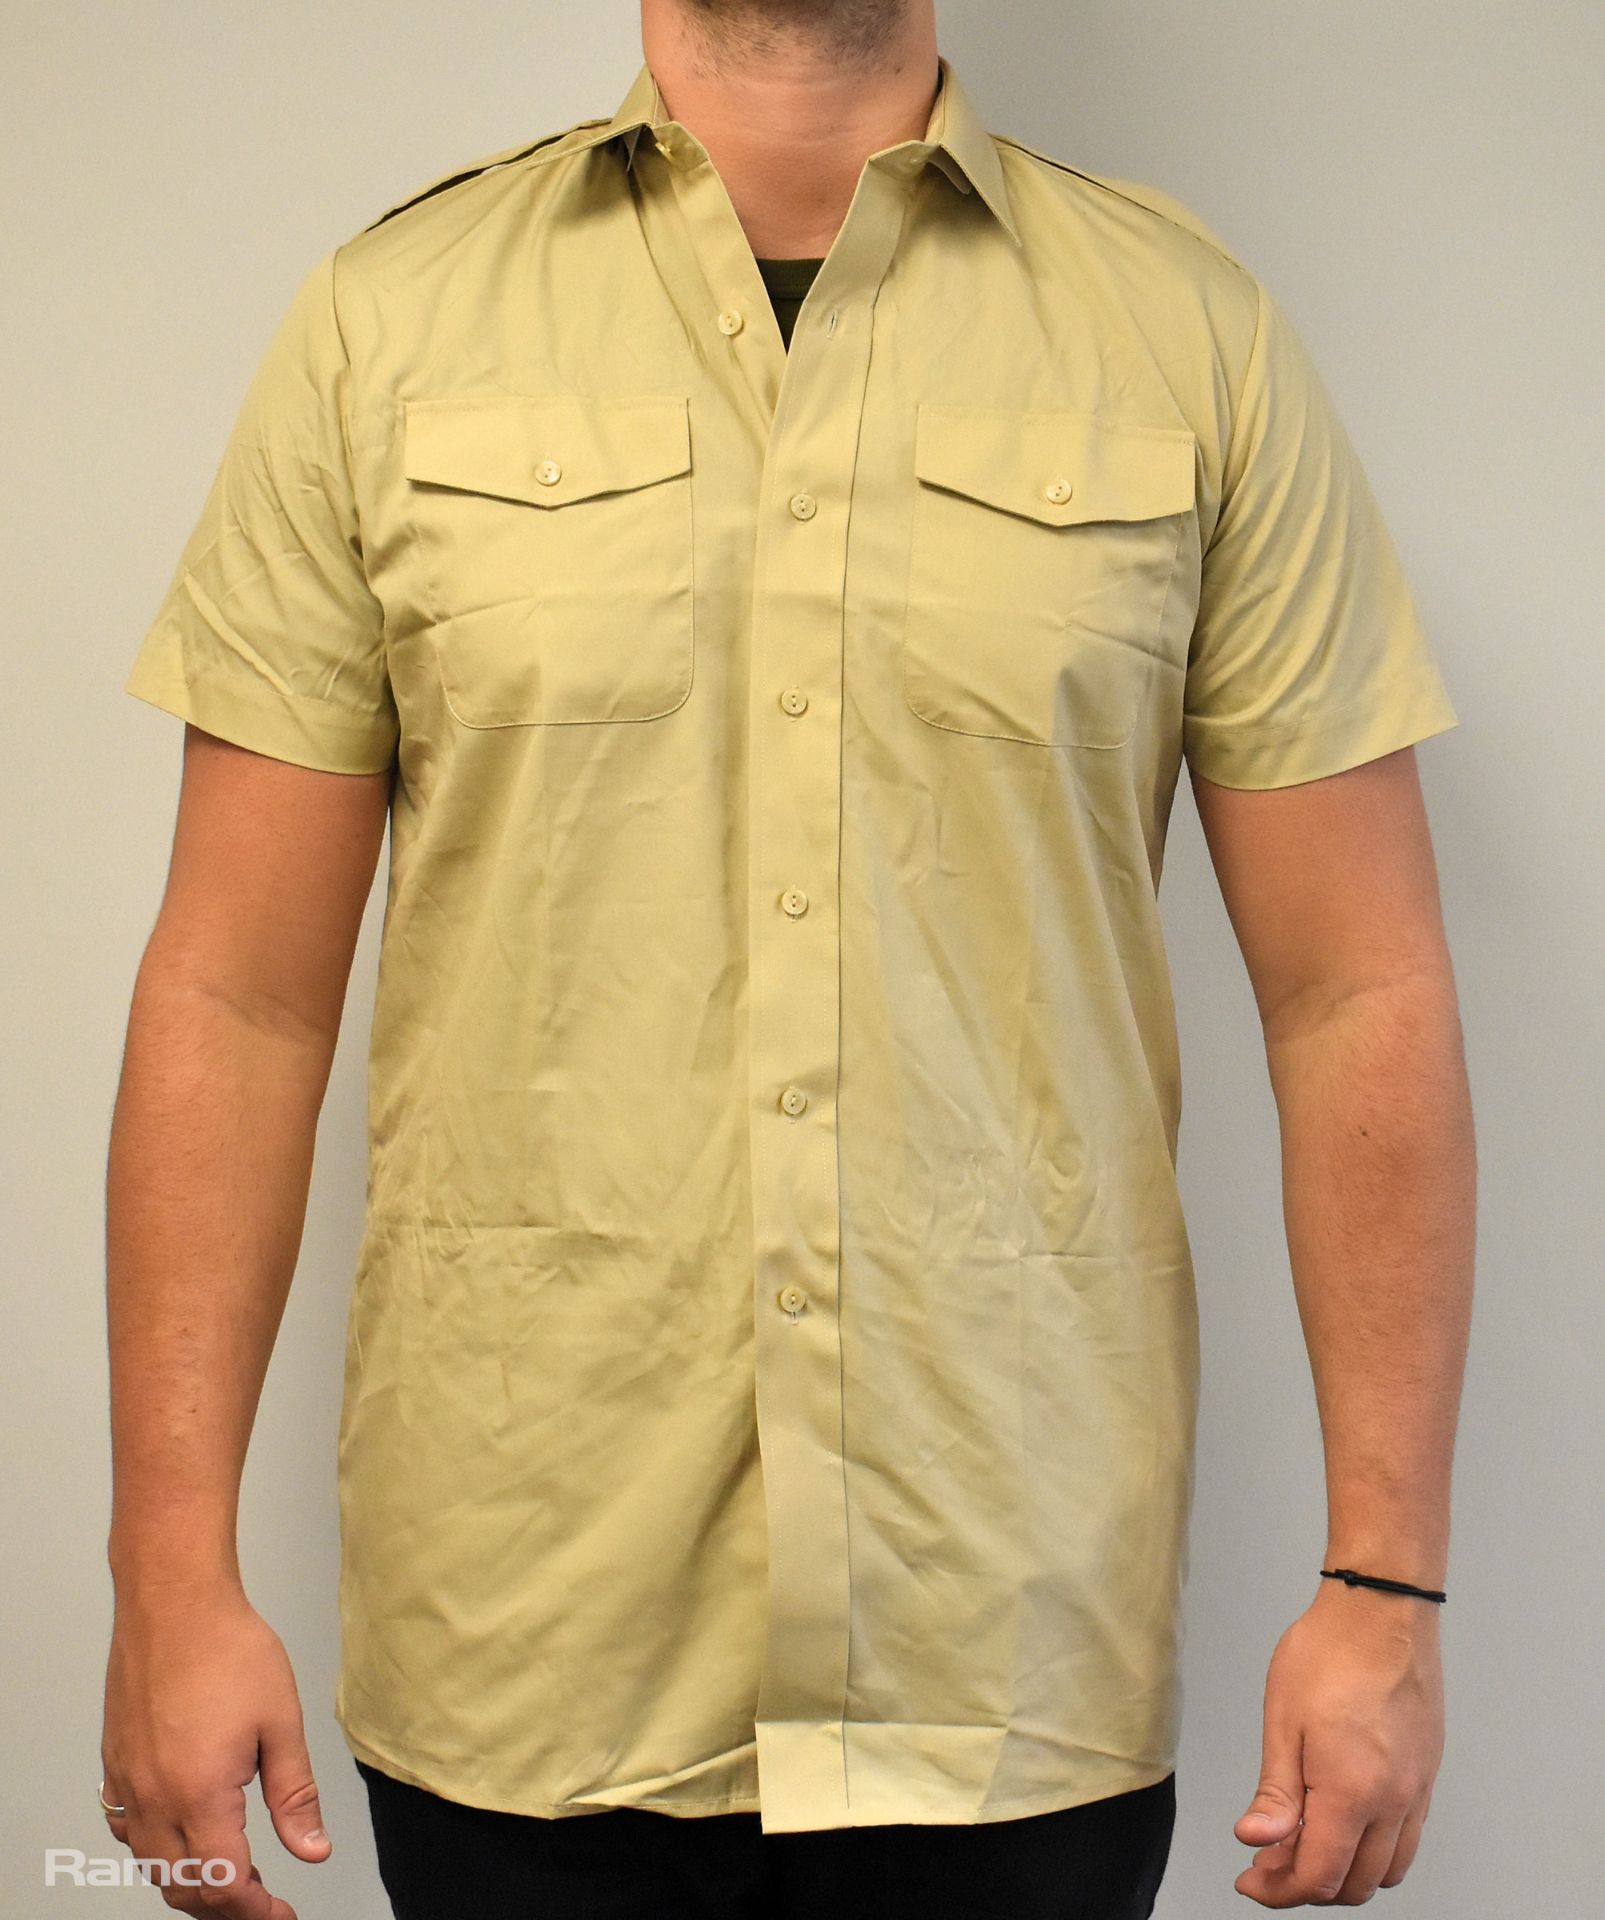 60x British Army shirts Fawn short sleeve - mixed grades and sizes